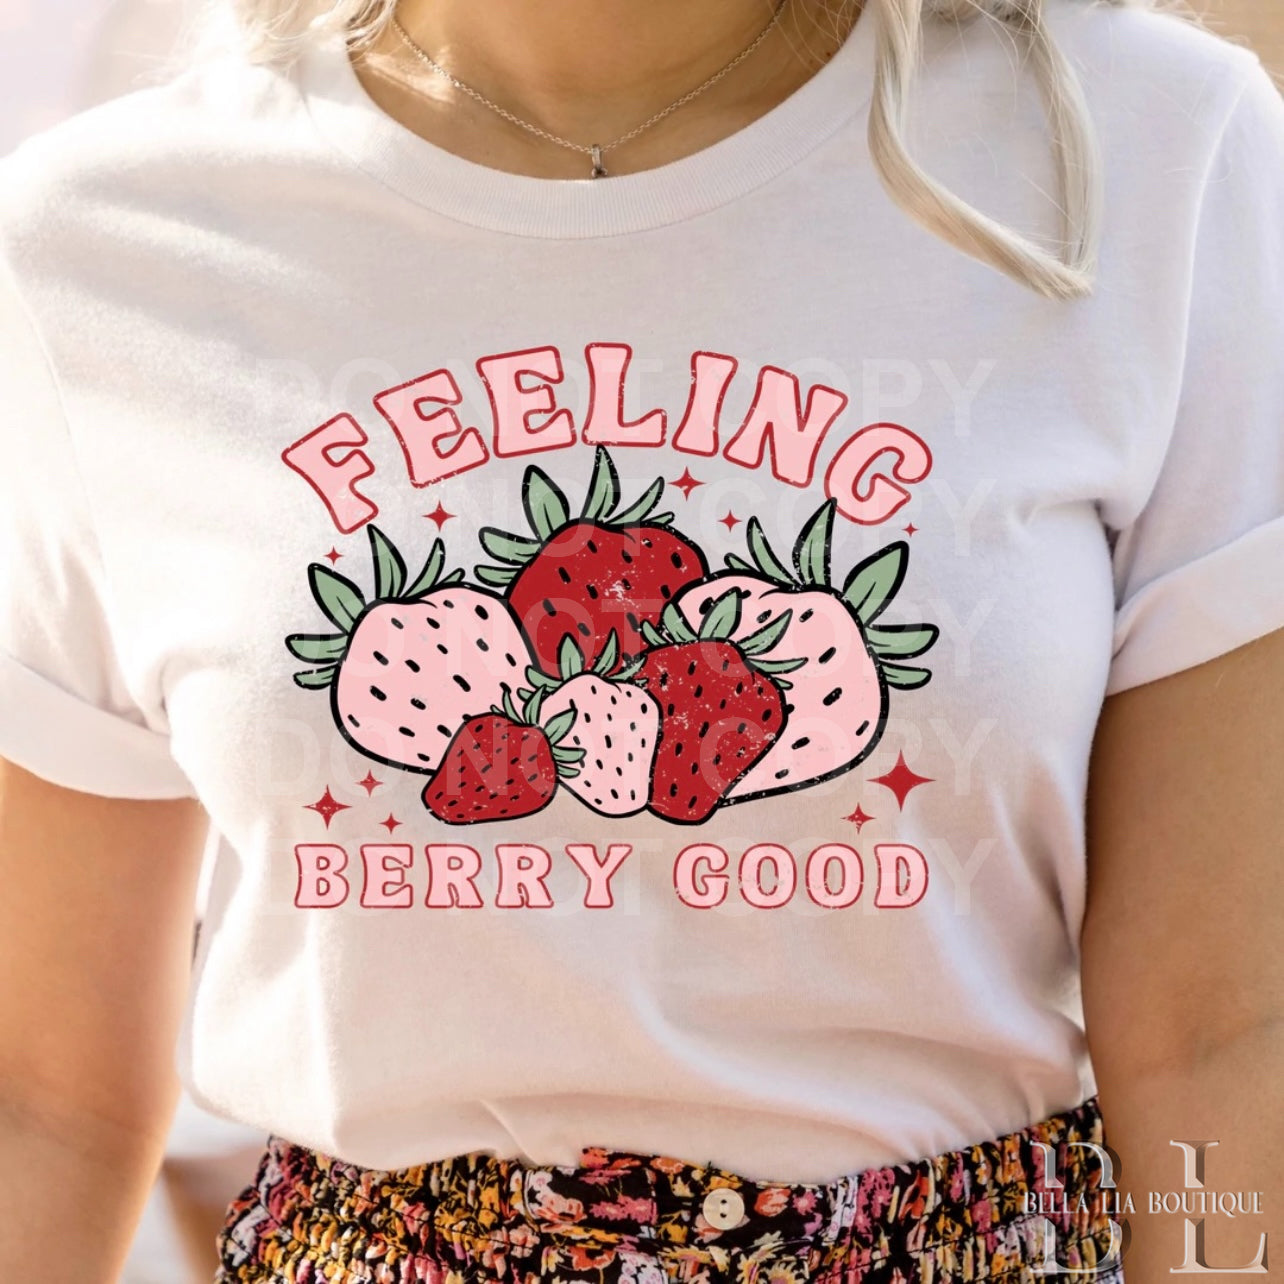 Feeling Berry Good Graphic Tee or Sweatshirt - Bella Lia Boutique